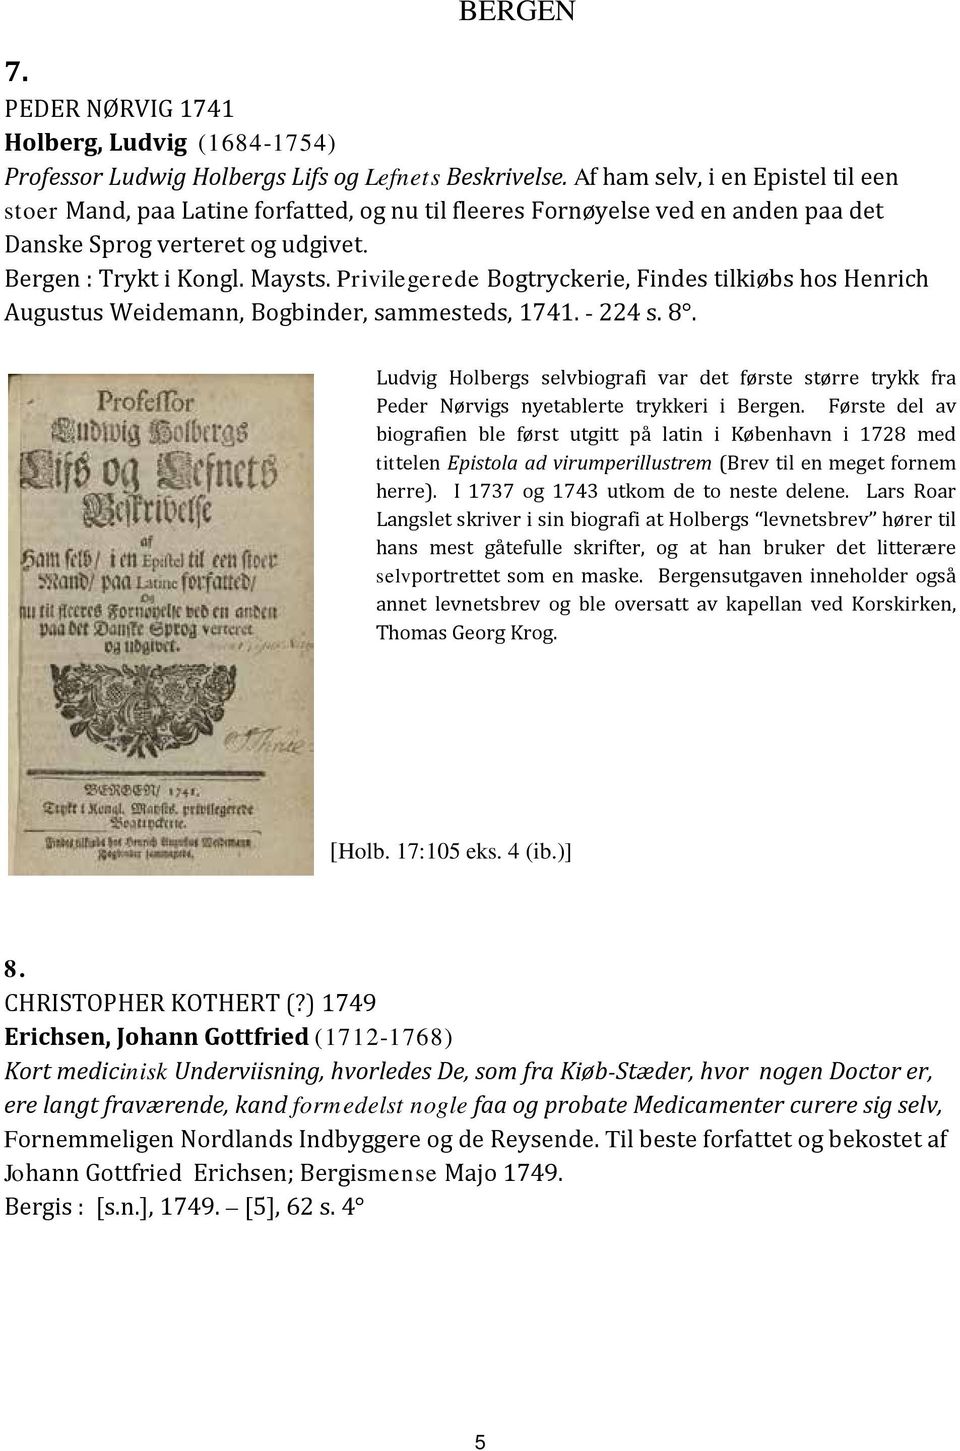 Privilegerede Bogtryckerie, Findes tilkiøbs hos Henrich Augustus Weidemann, Bogbinder, sammesteds, 1741. - 224 s. 8.